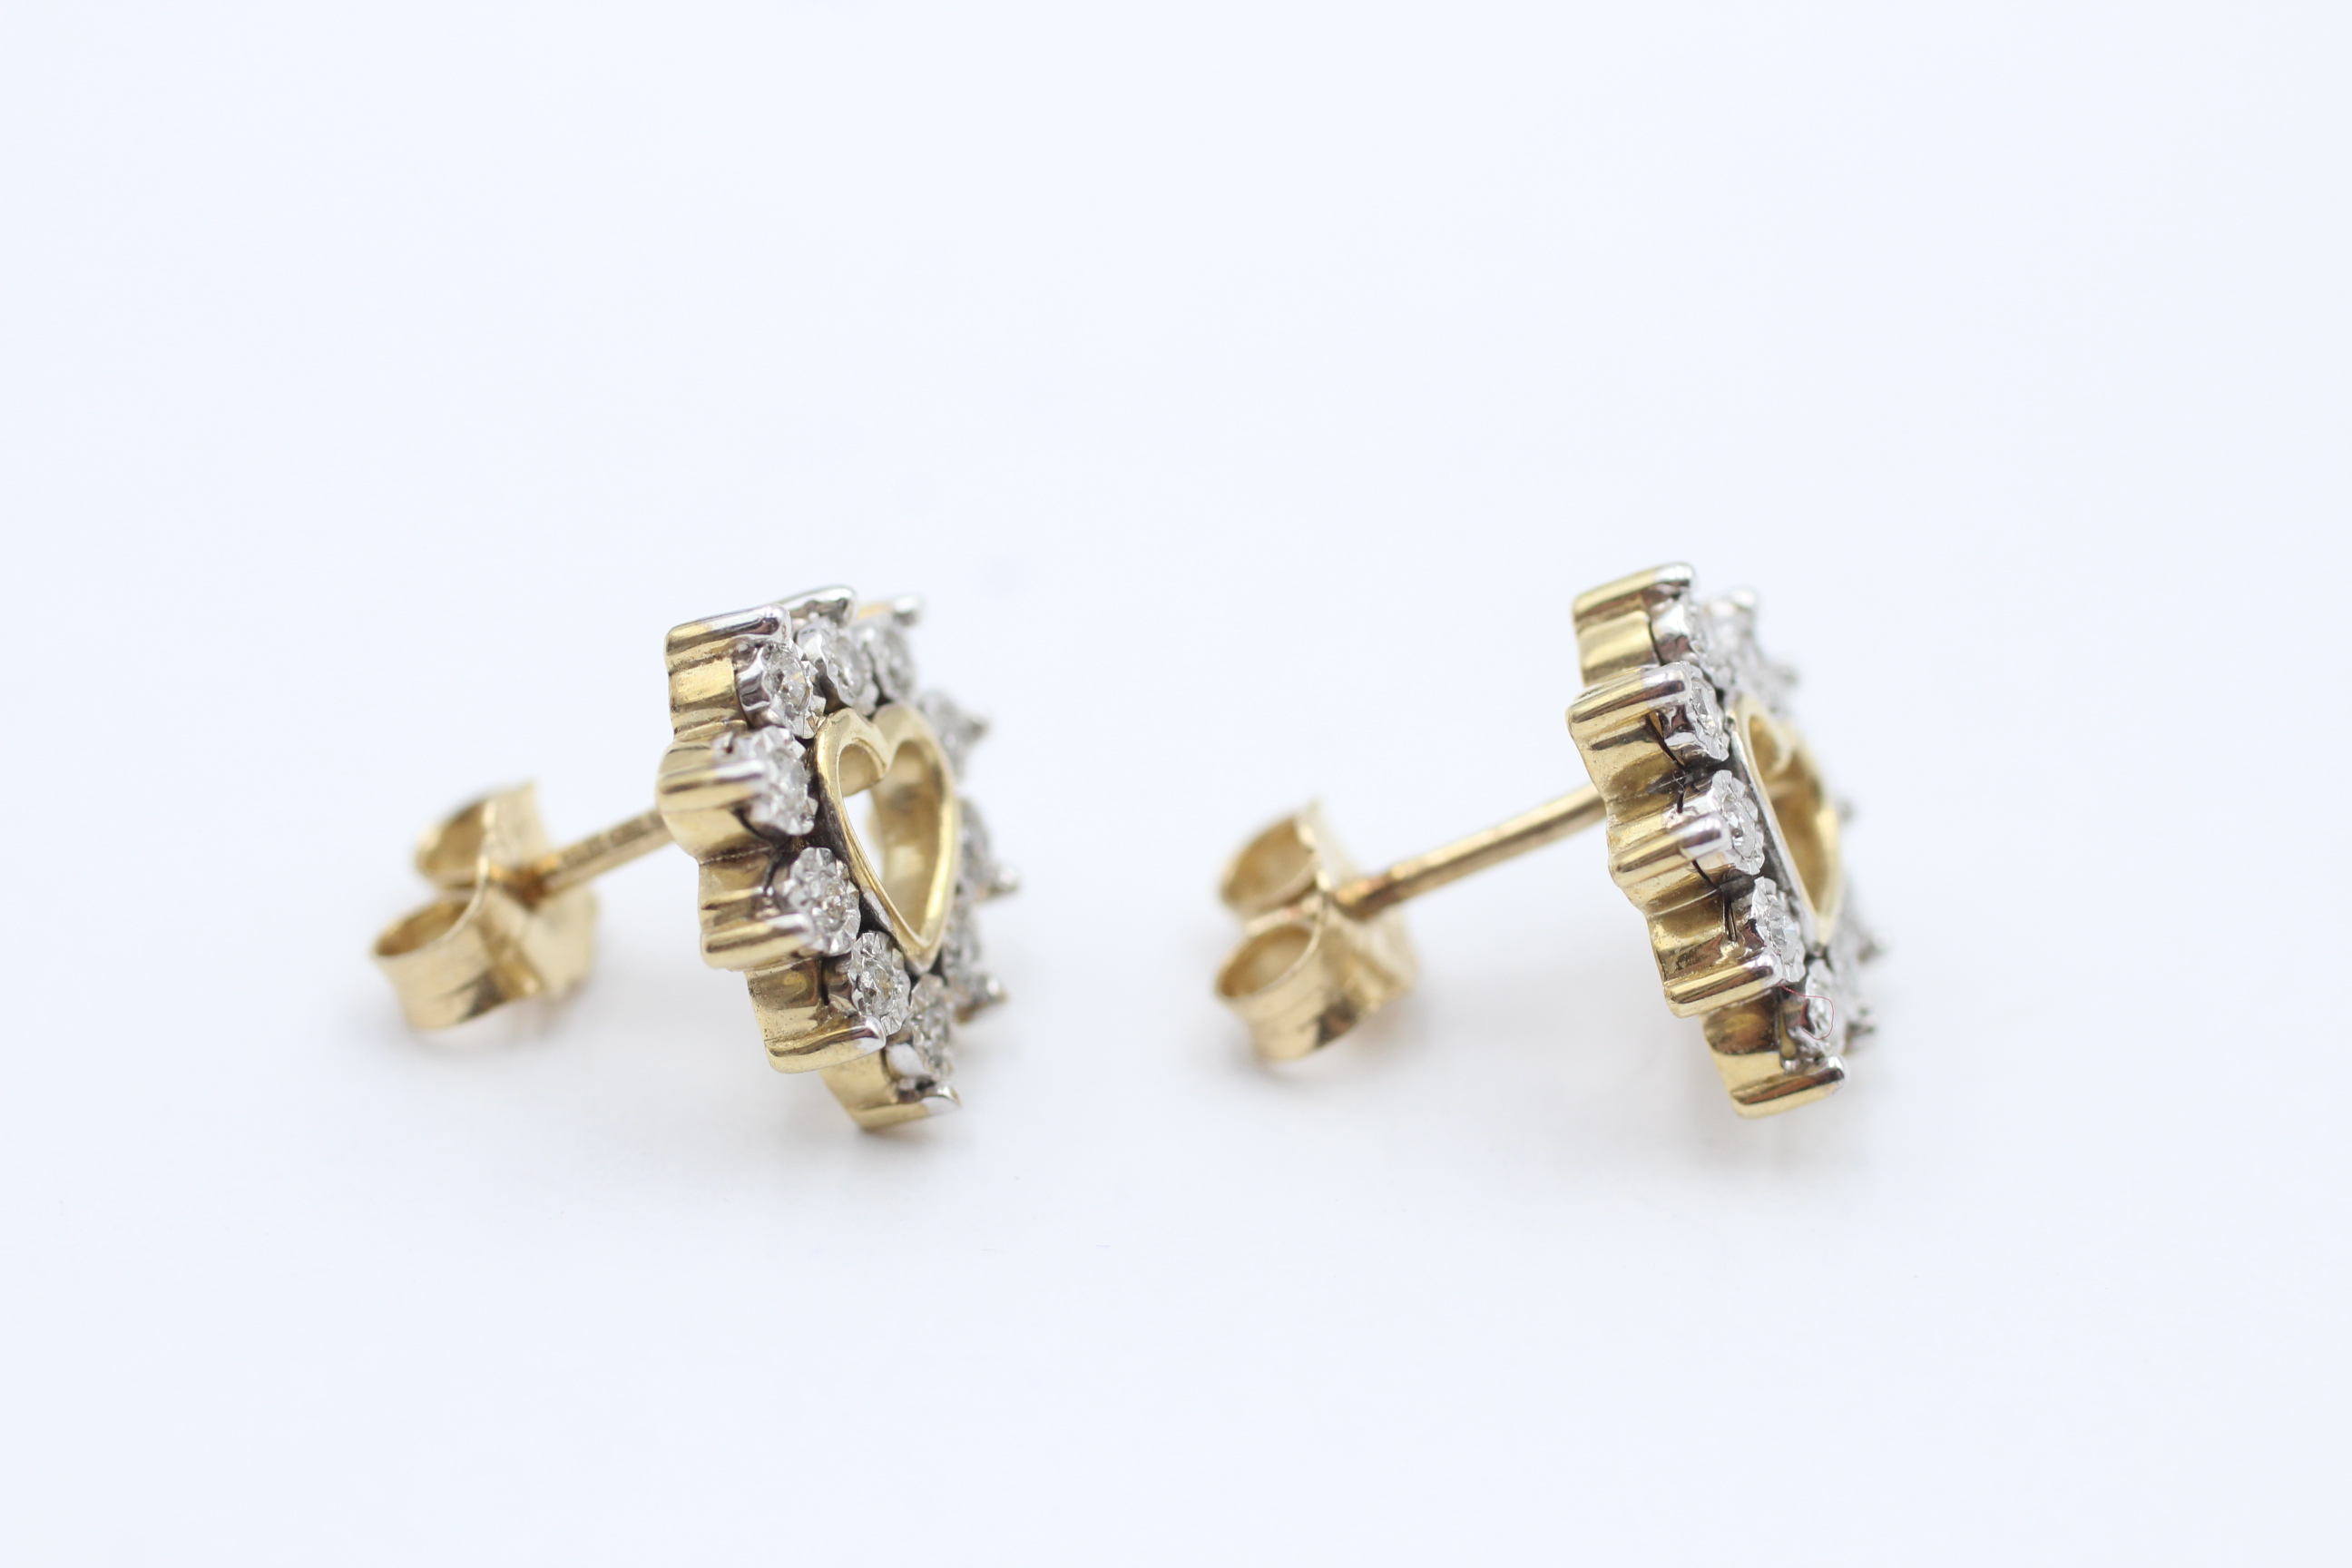 9ct Gold Diamond Set Heart Earrings - Image 2 of 4